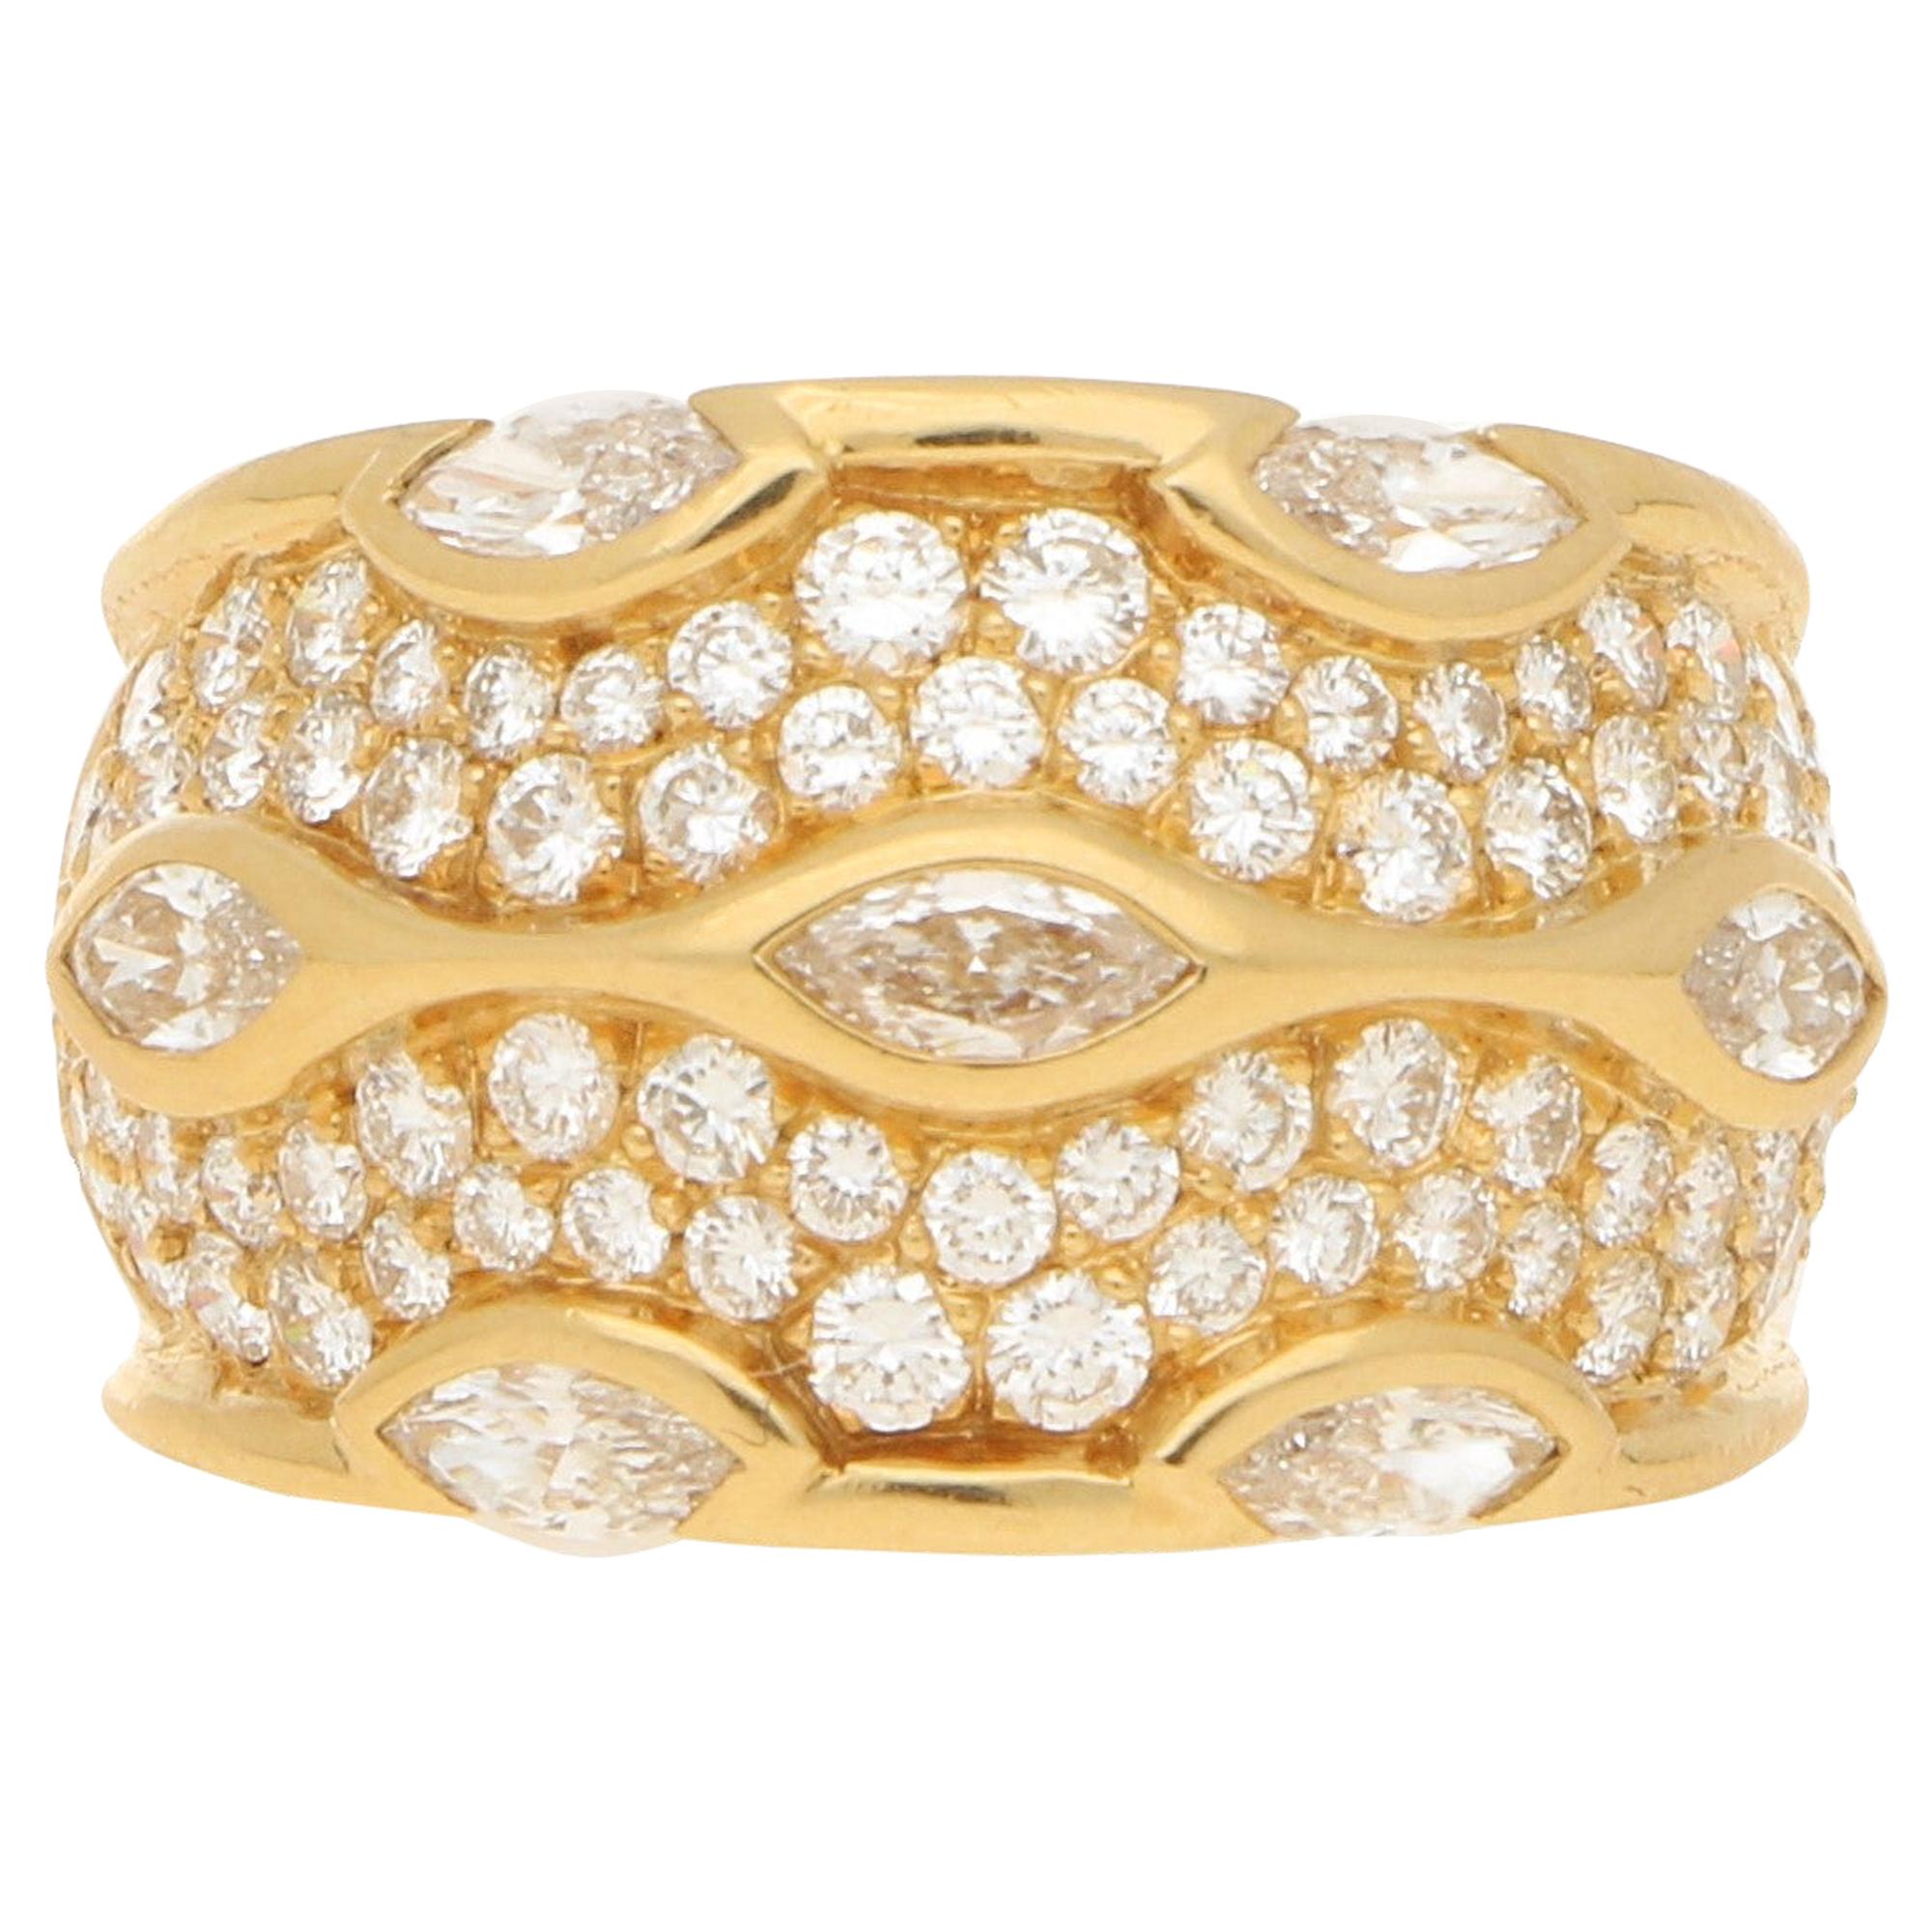 Chaumet Paris Marquise Diamond Bombe Ring Set in 18k Yellow Gold